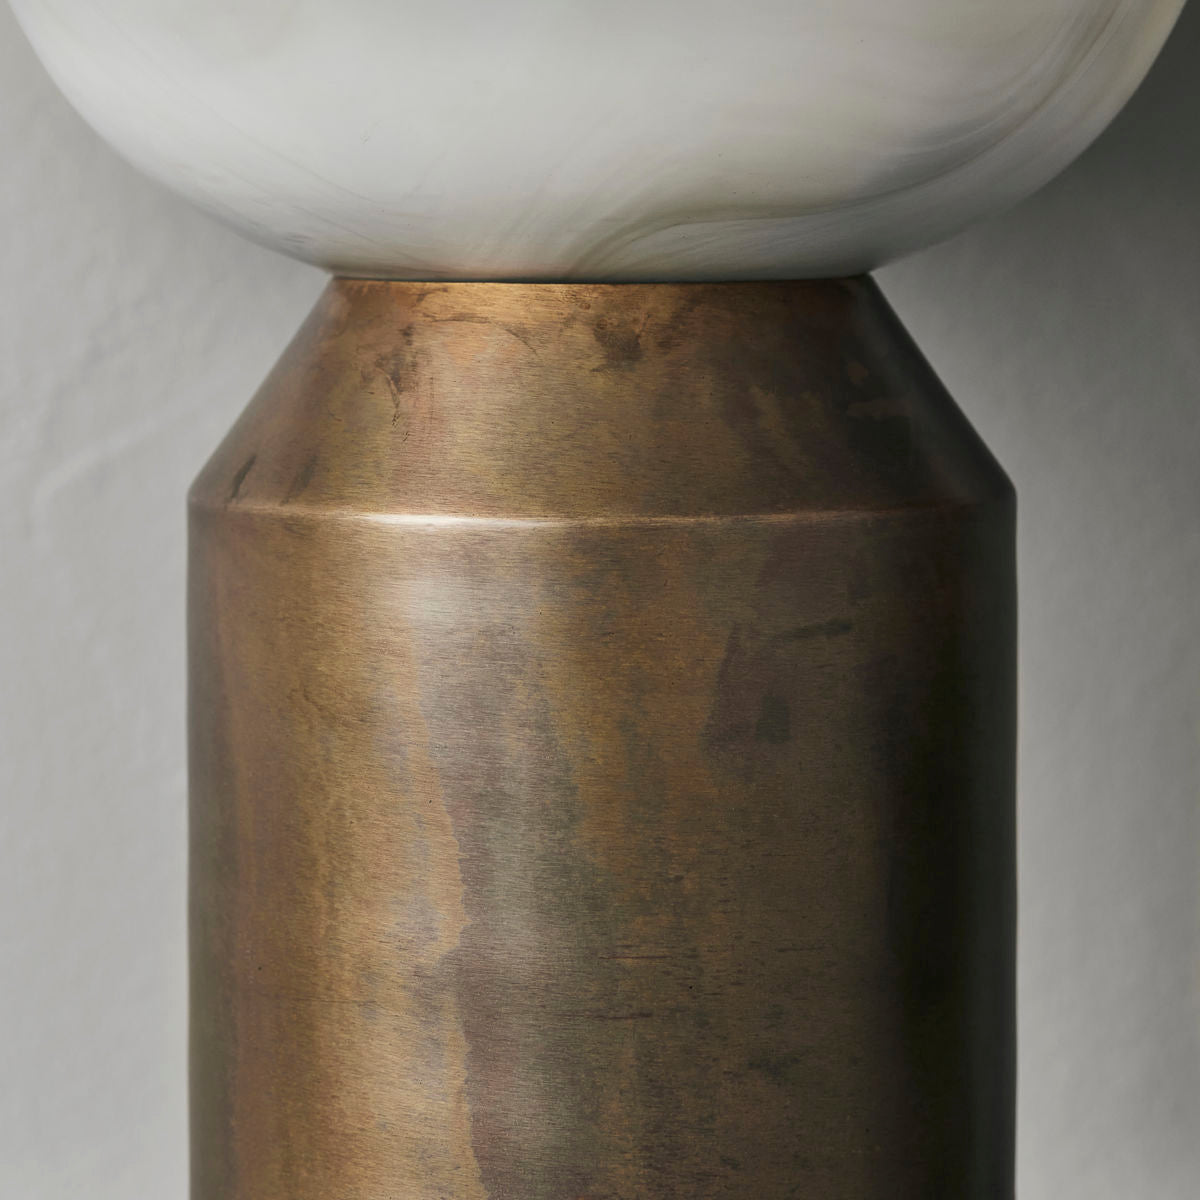 Table lamp, Big fellow, Antique brass finish